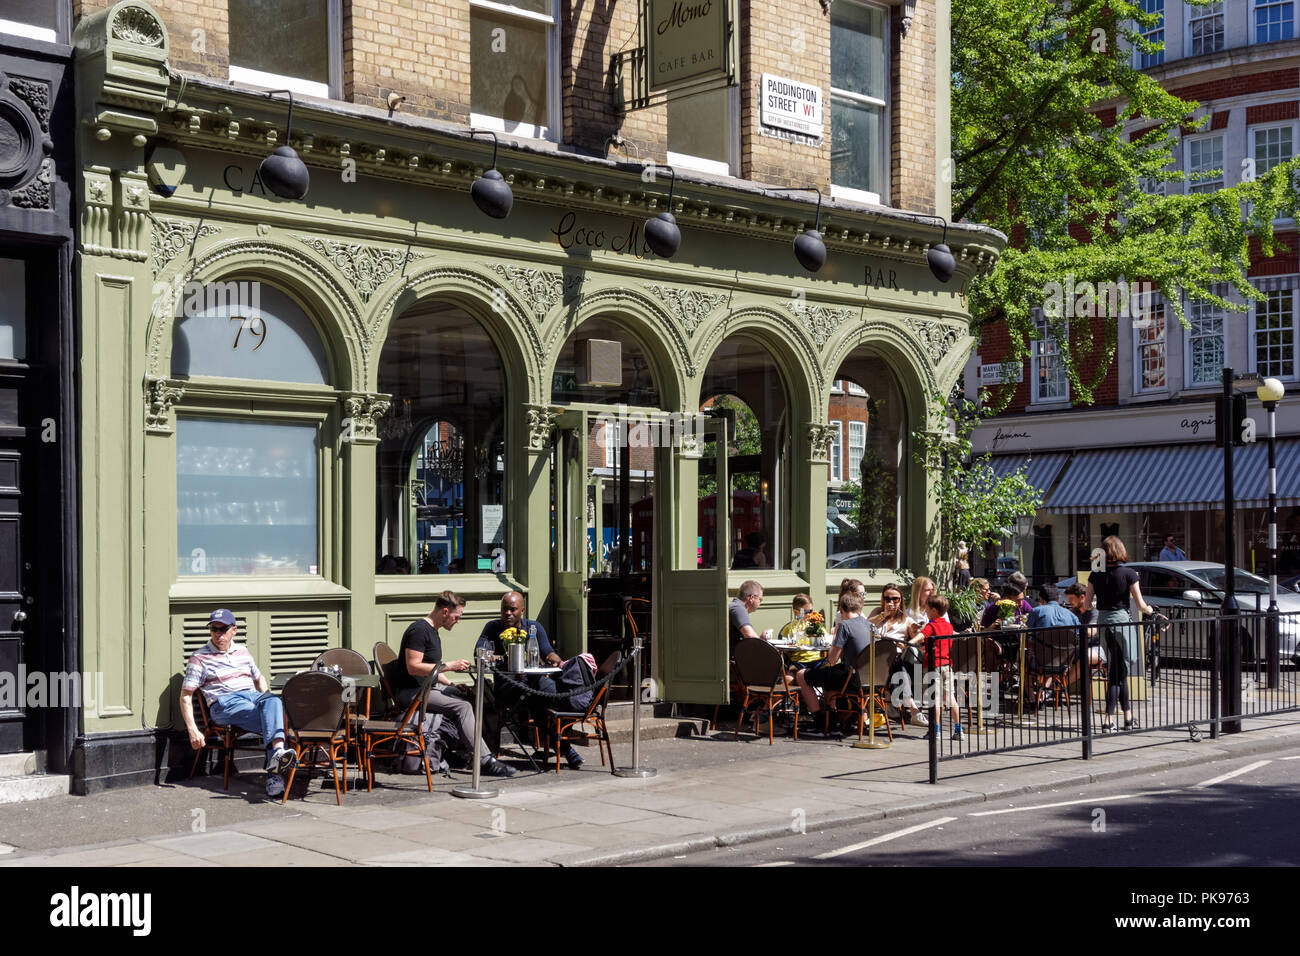 Les gens assis dehors Coco restaurant Momo dans Marylebone, Londres Angleterre Royaume-Uni UK Banque D'Images